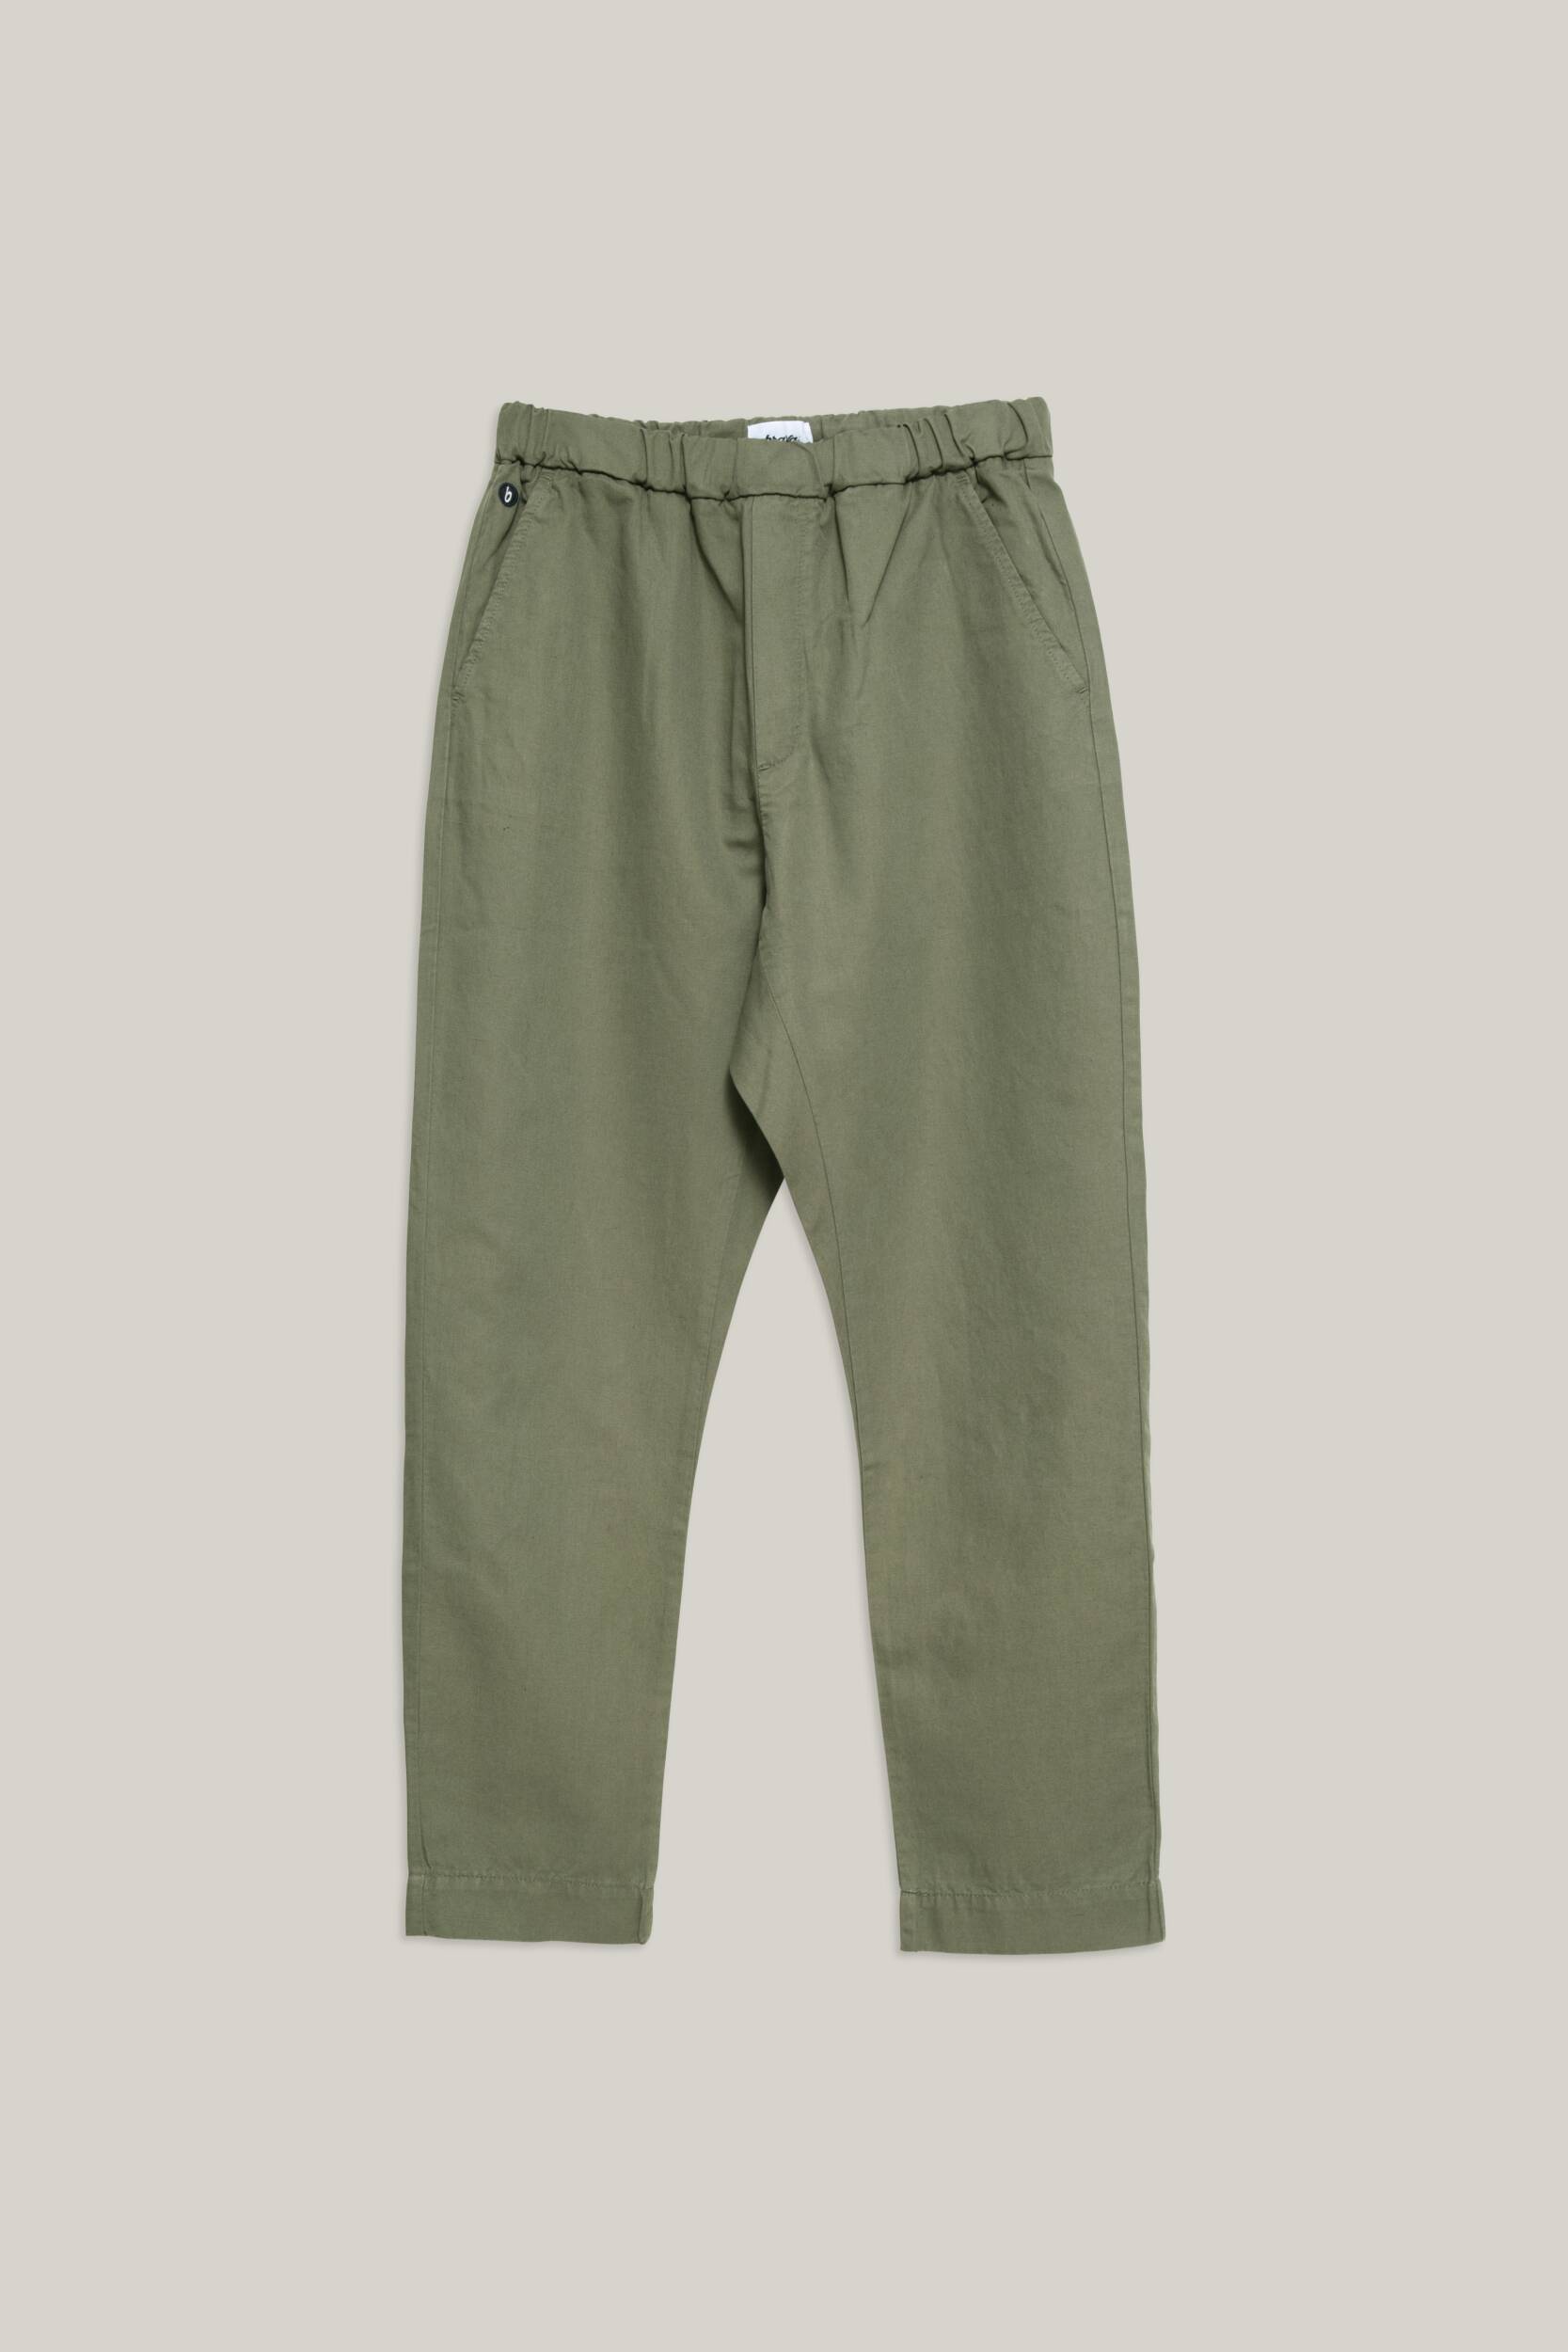 Brava Fabrics Pantalons Oversize Pant Safari moda sostenible moda ètica